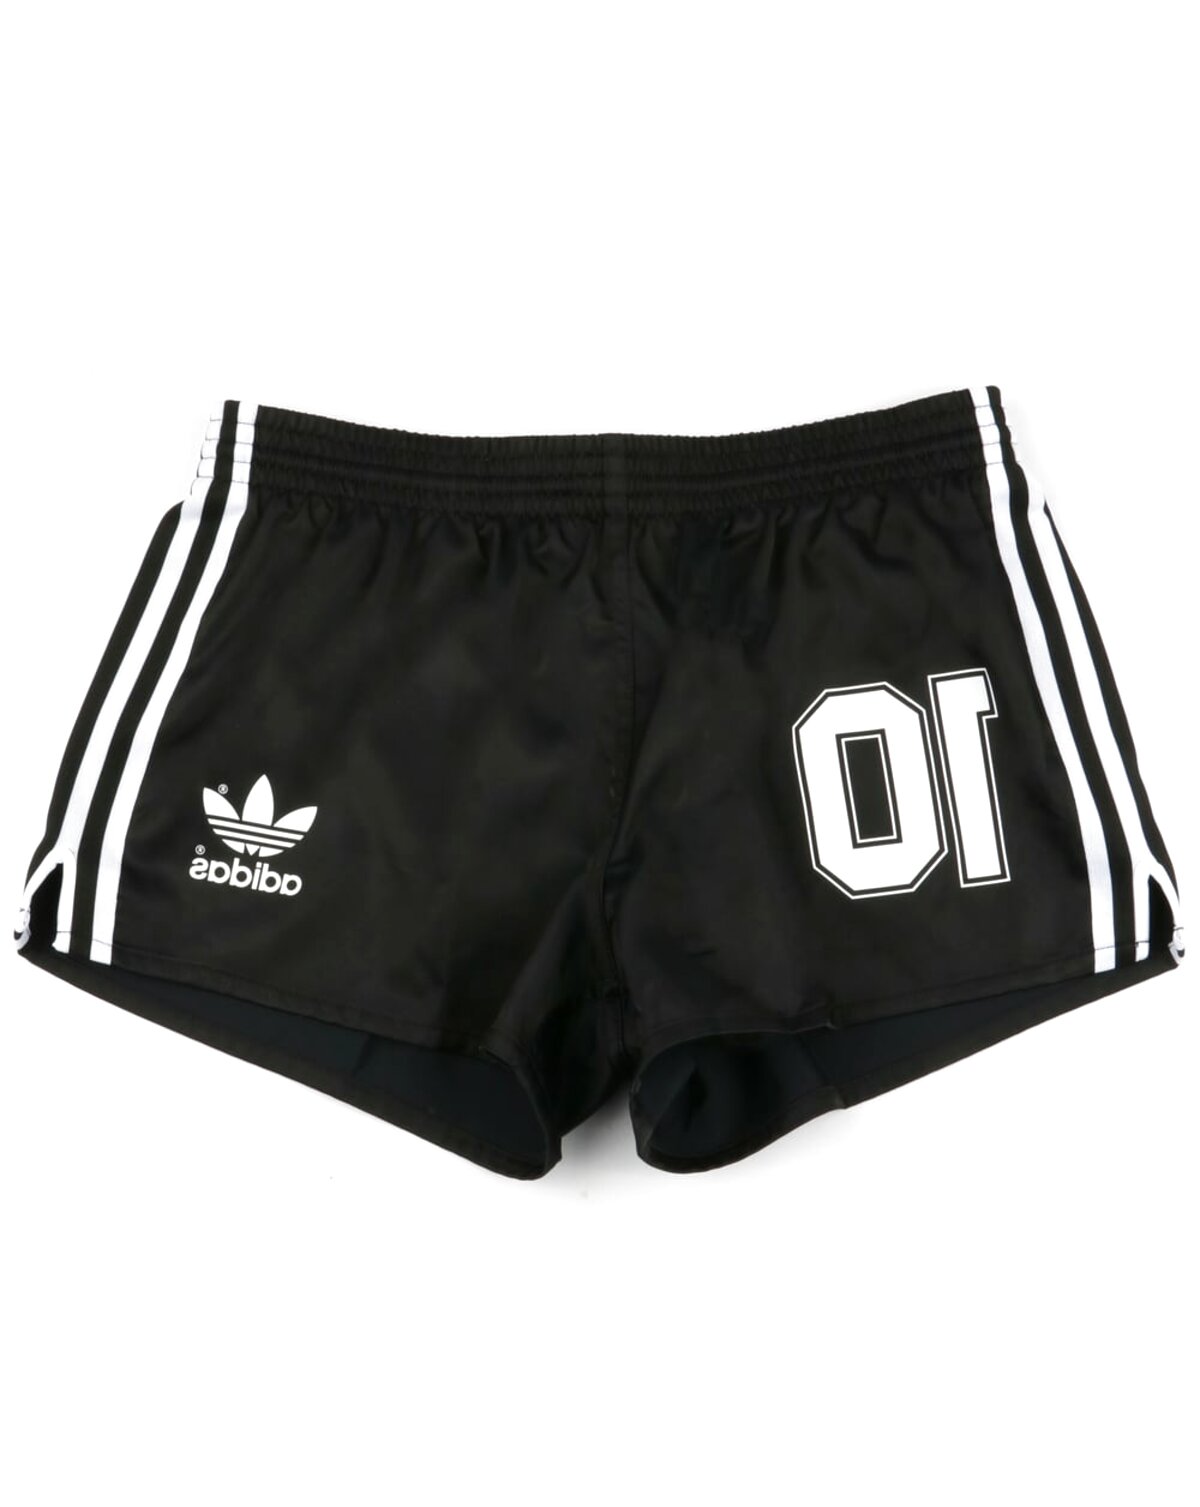 Retro Football Shorts for sale in UK | 58 used Retro Football Shorts